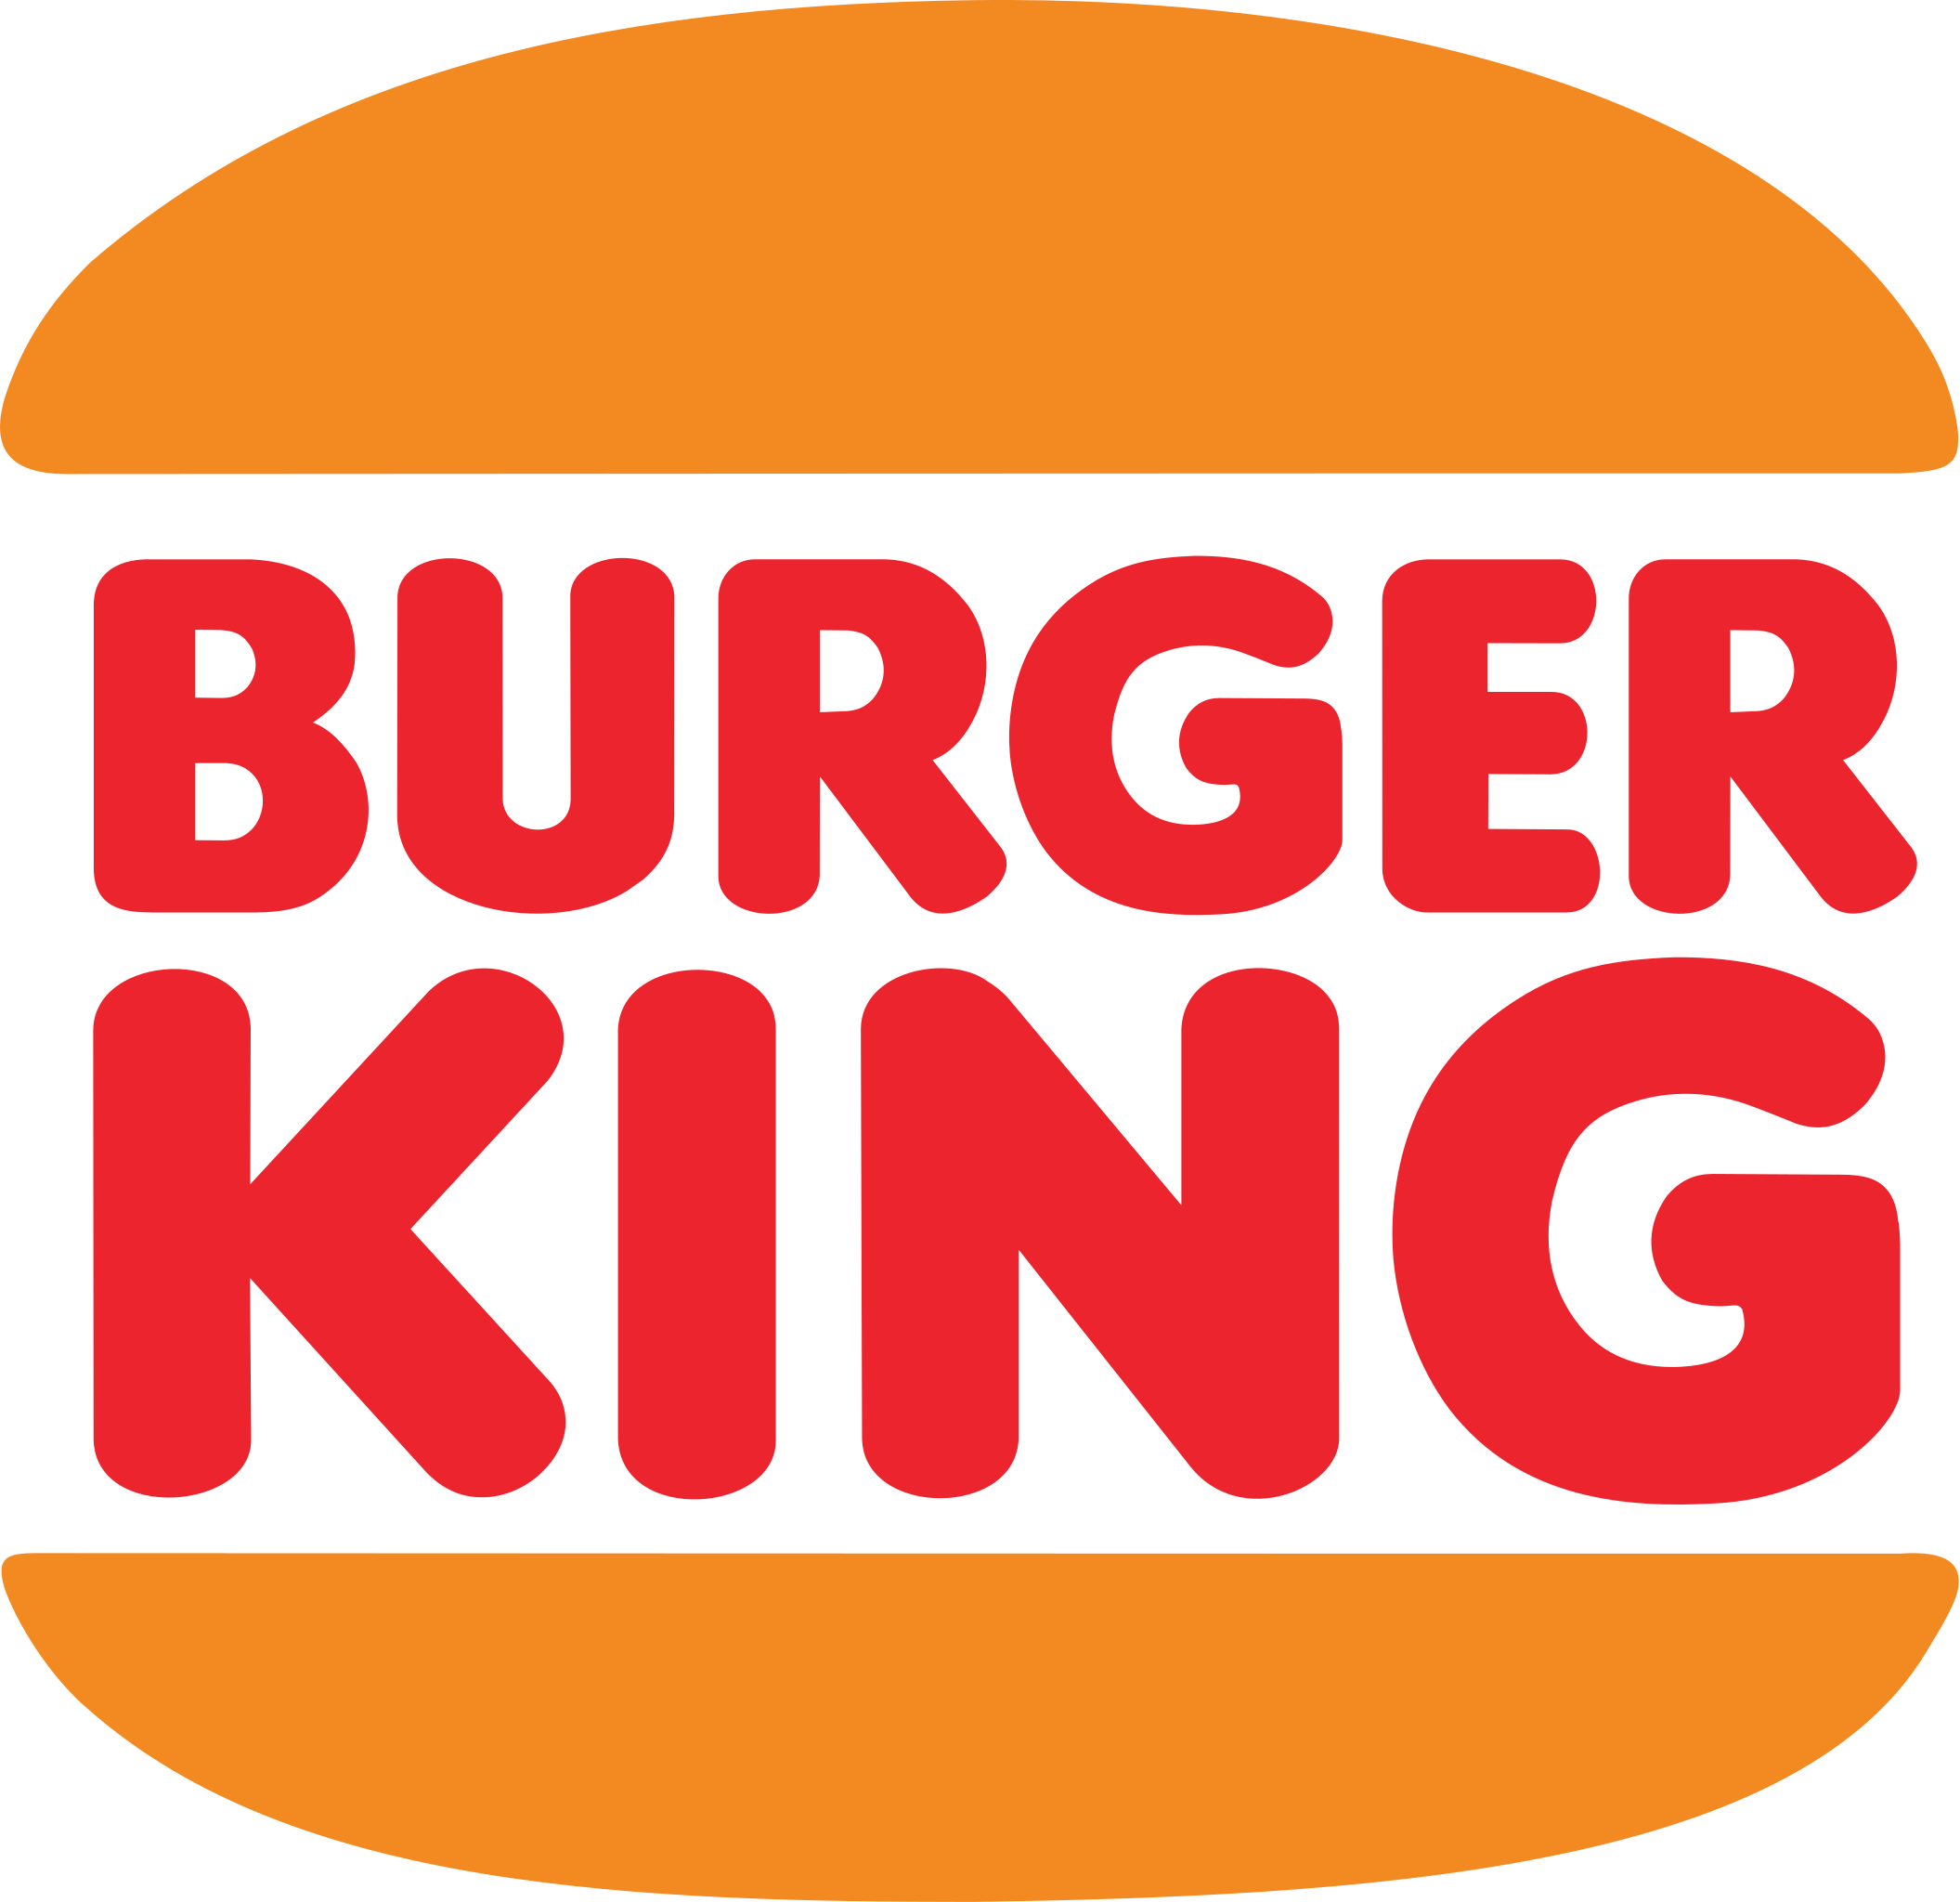 Burger_King_logo_(1994).svg